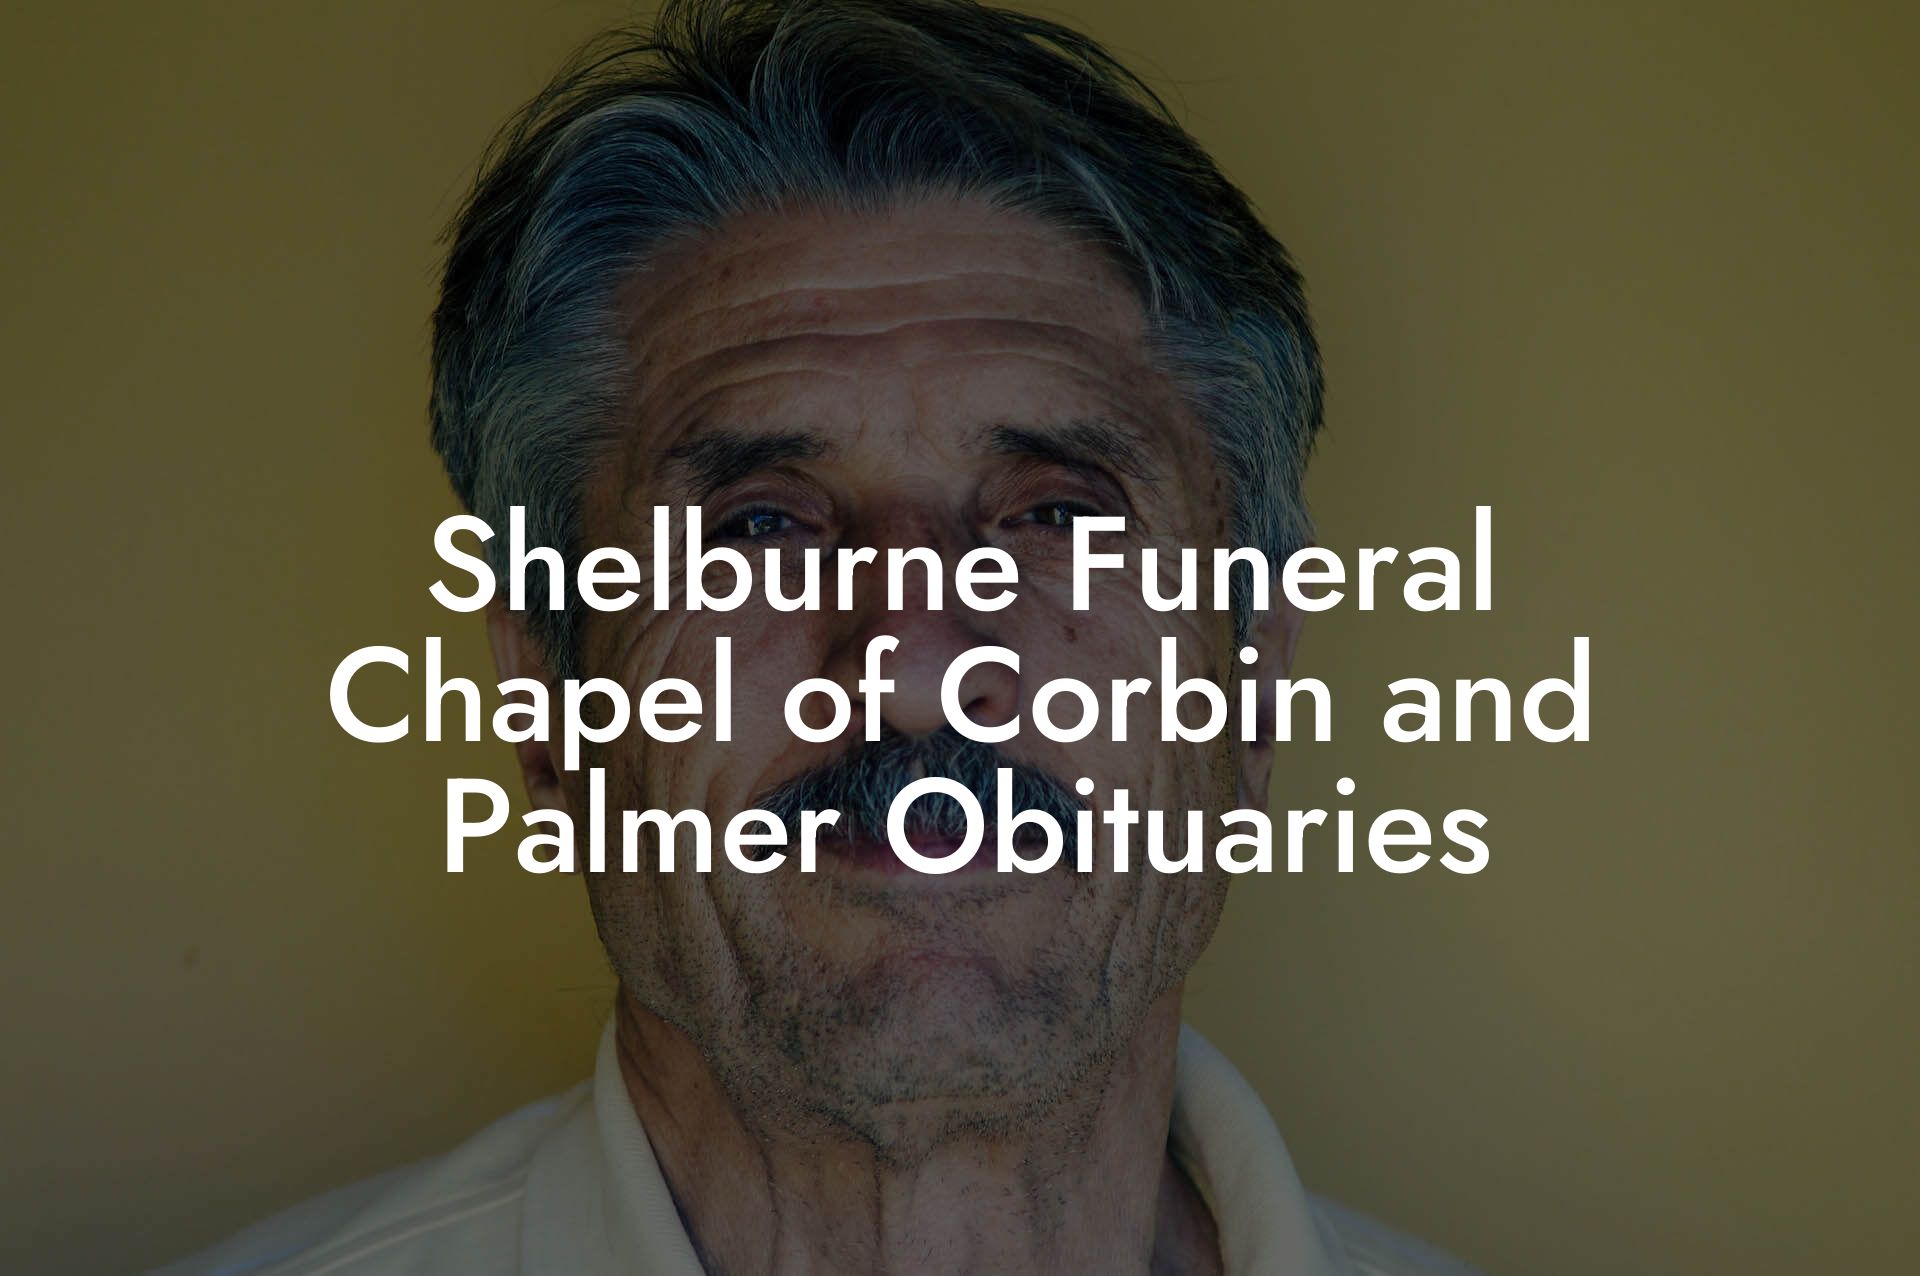 Shelburne Funeral Chapel of Corbin and Palmer Obituaries